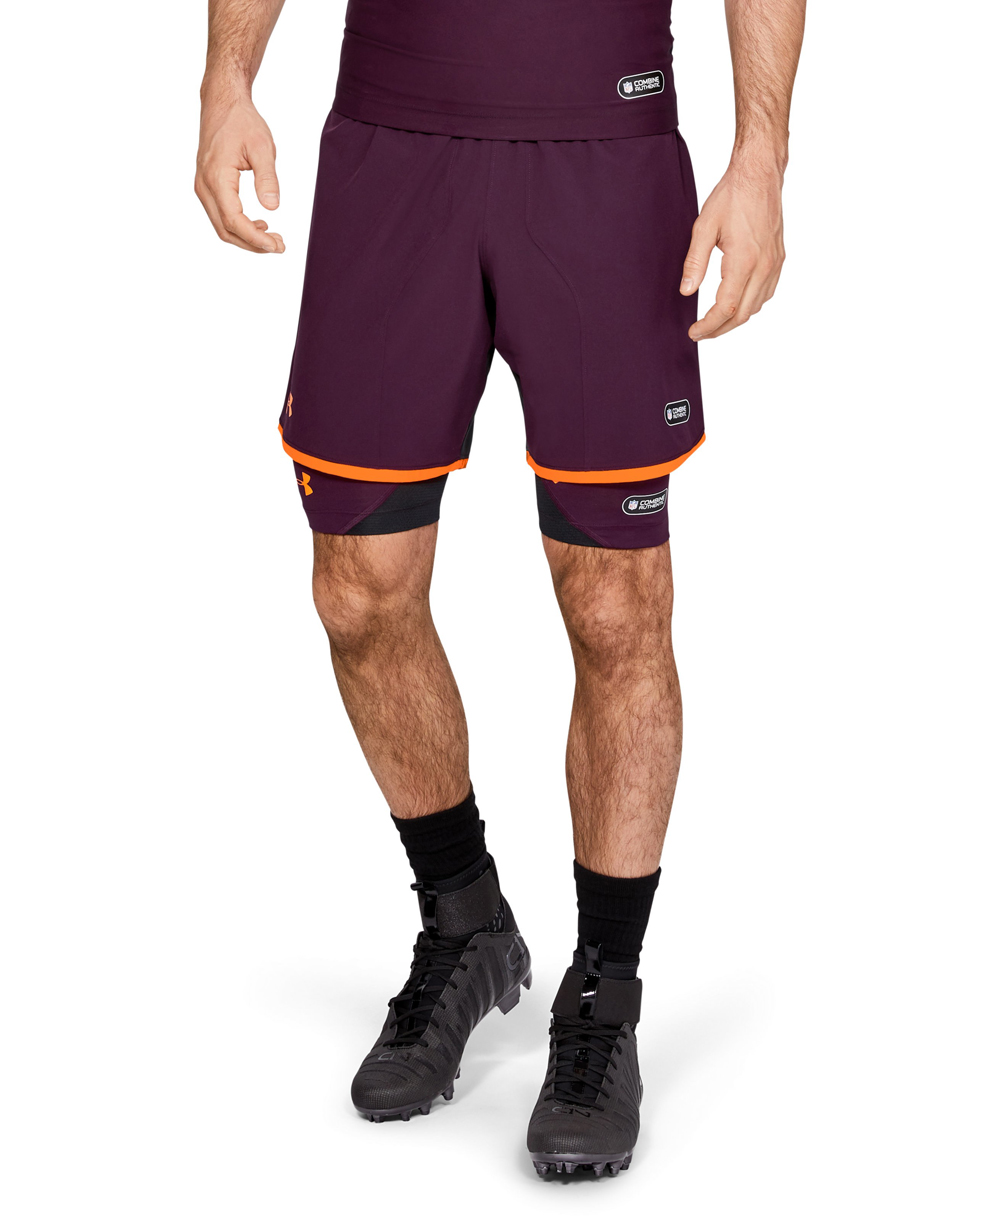 nfl combine shorts